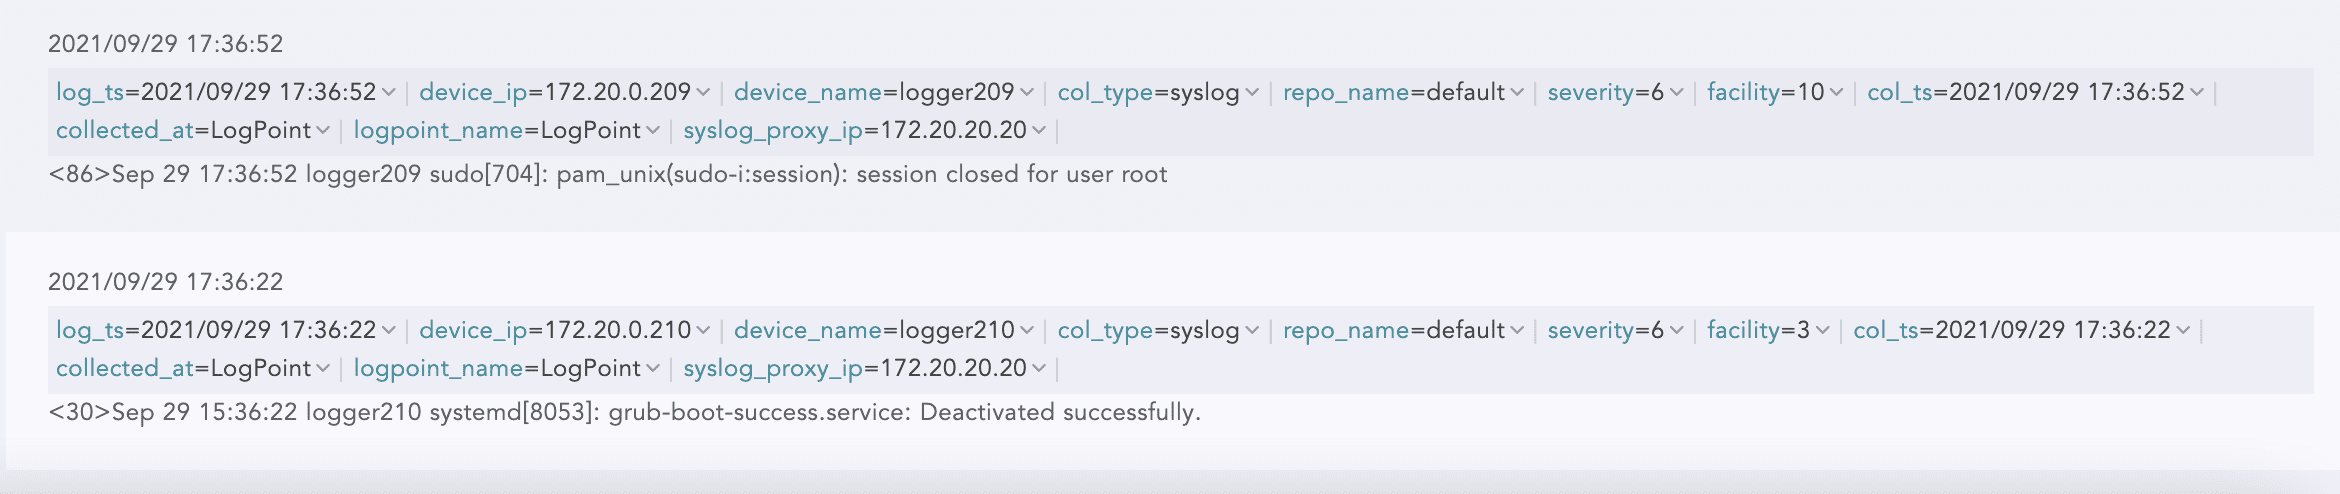 logger209 is on CET whereas logger210 uses UTC